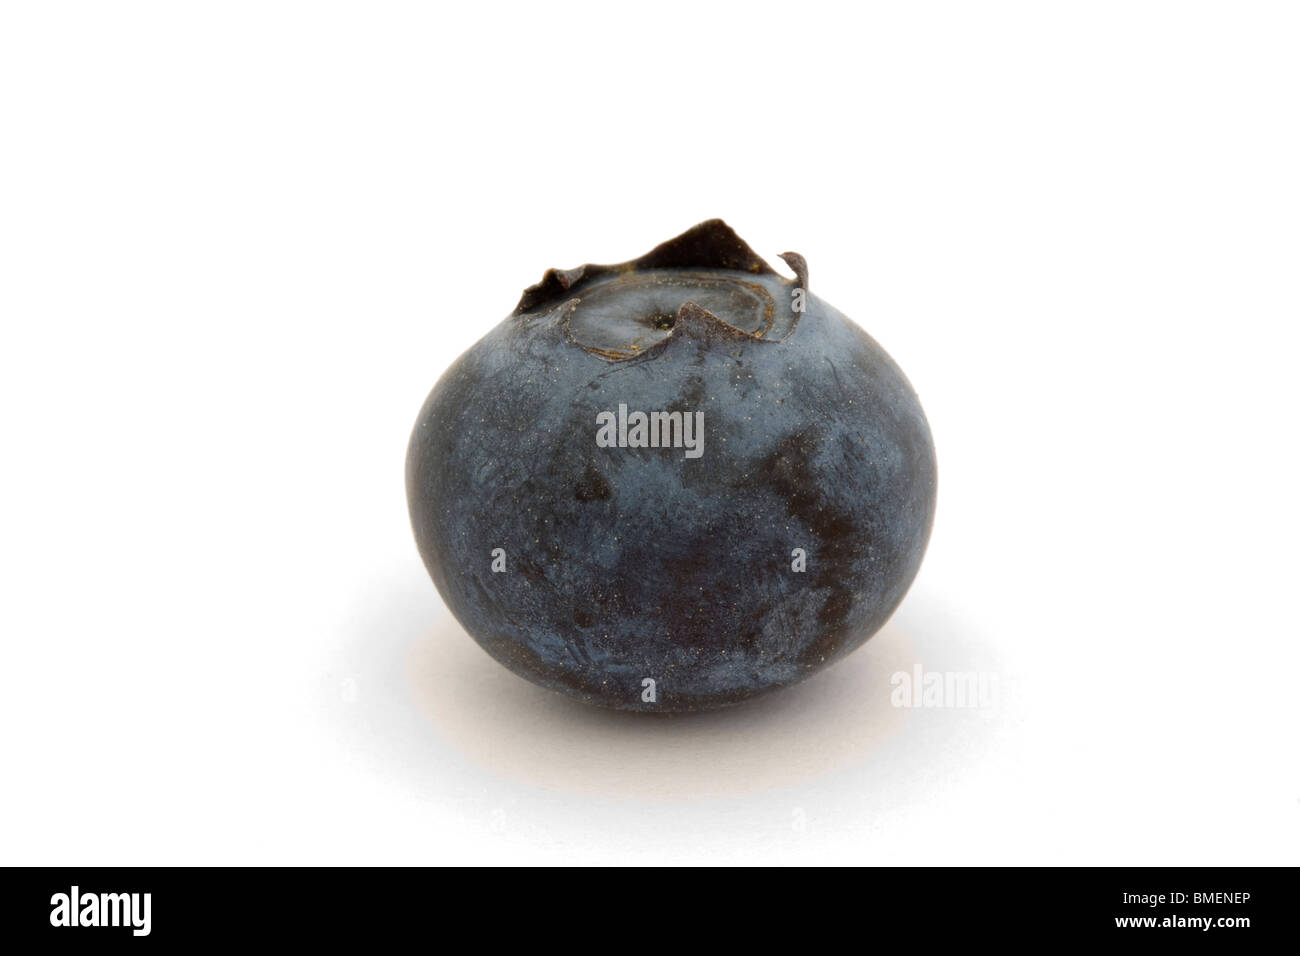 single blueberry isolated on a white background Stock Photo